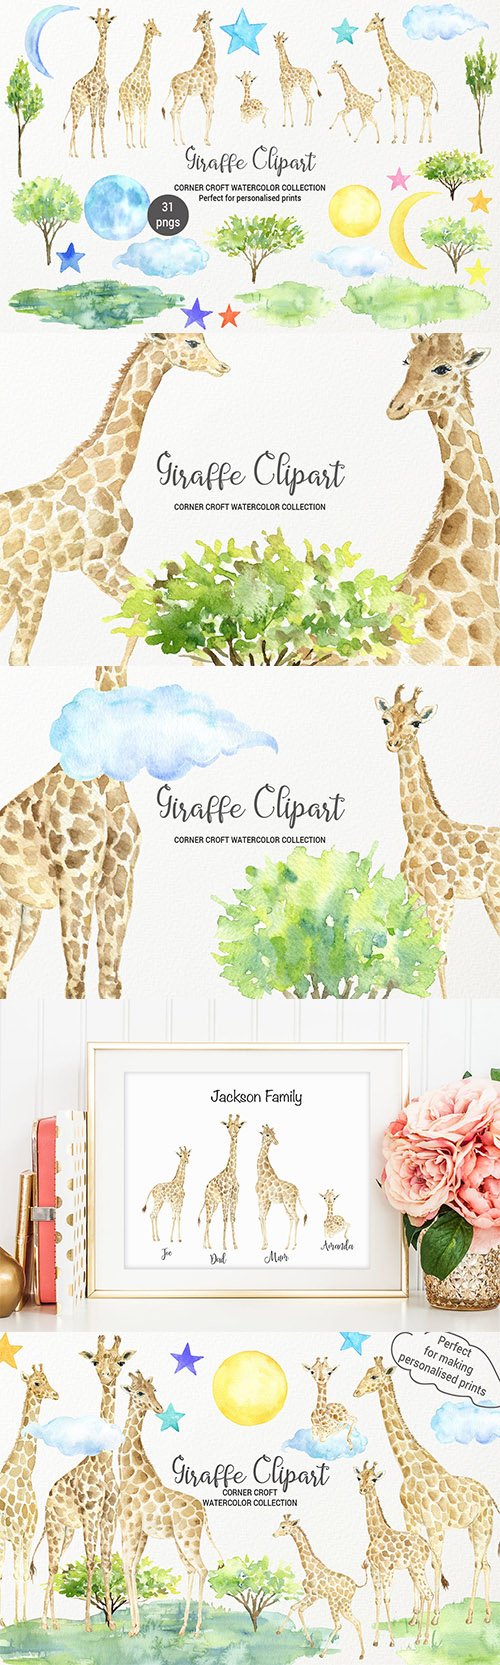 Watercolor Giraffe Clipart